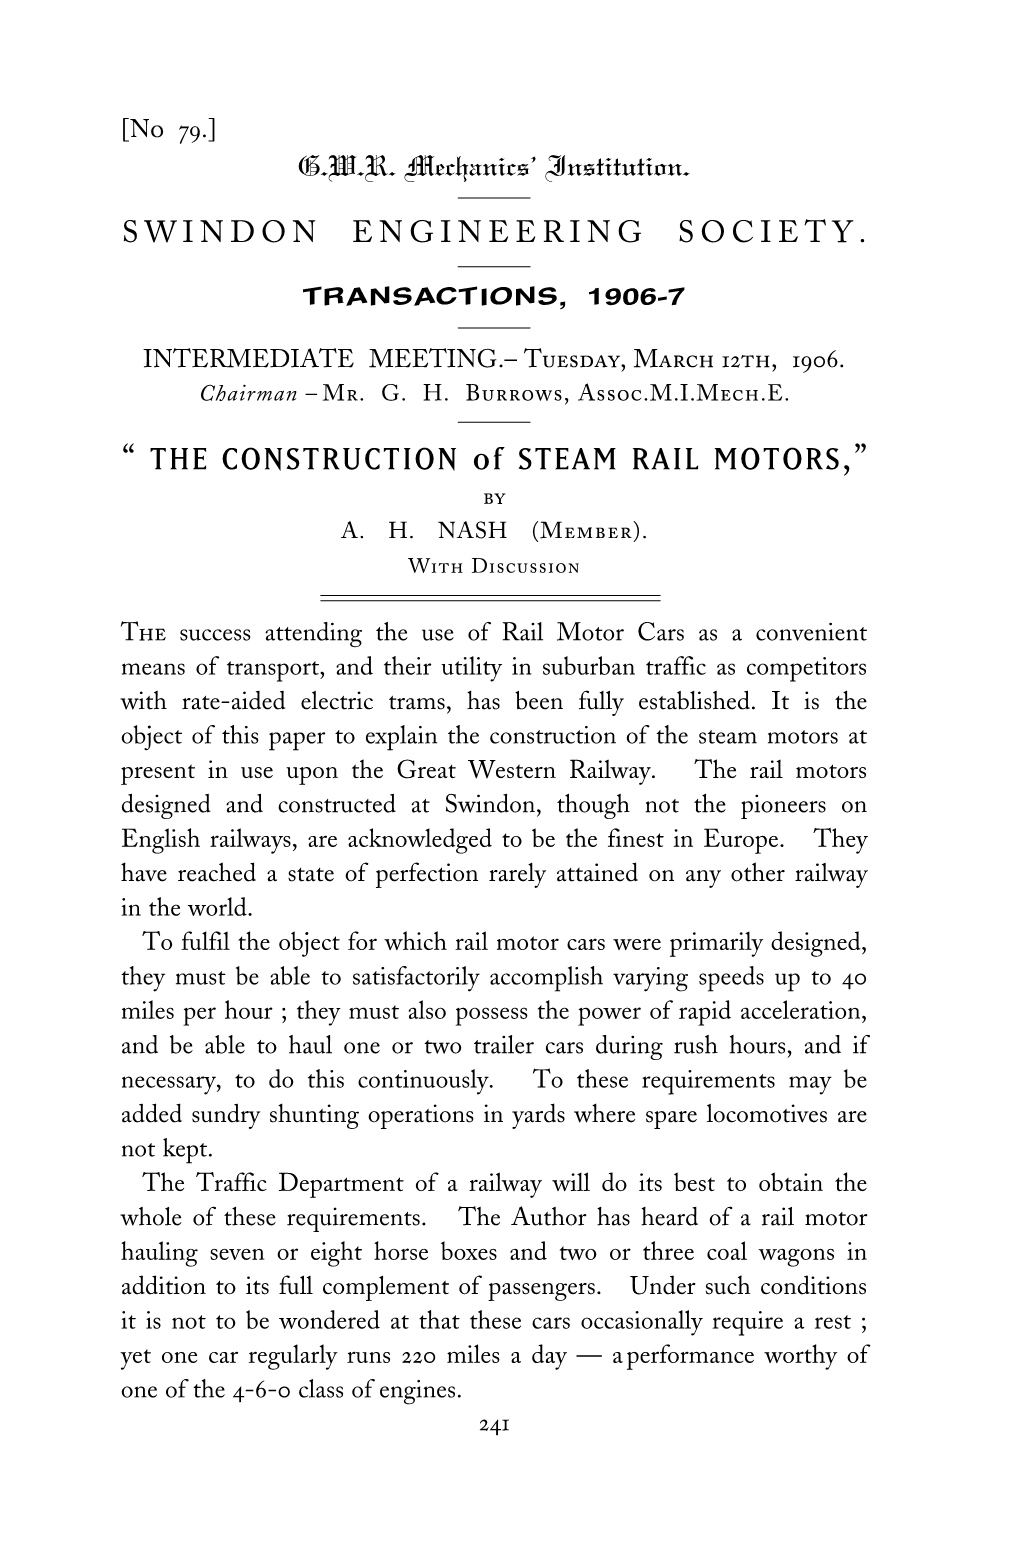 “ the CONSTRUCTION of STEAM RAIL MOTORS,”